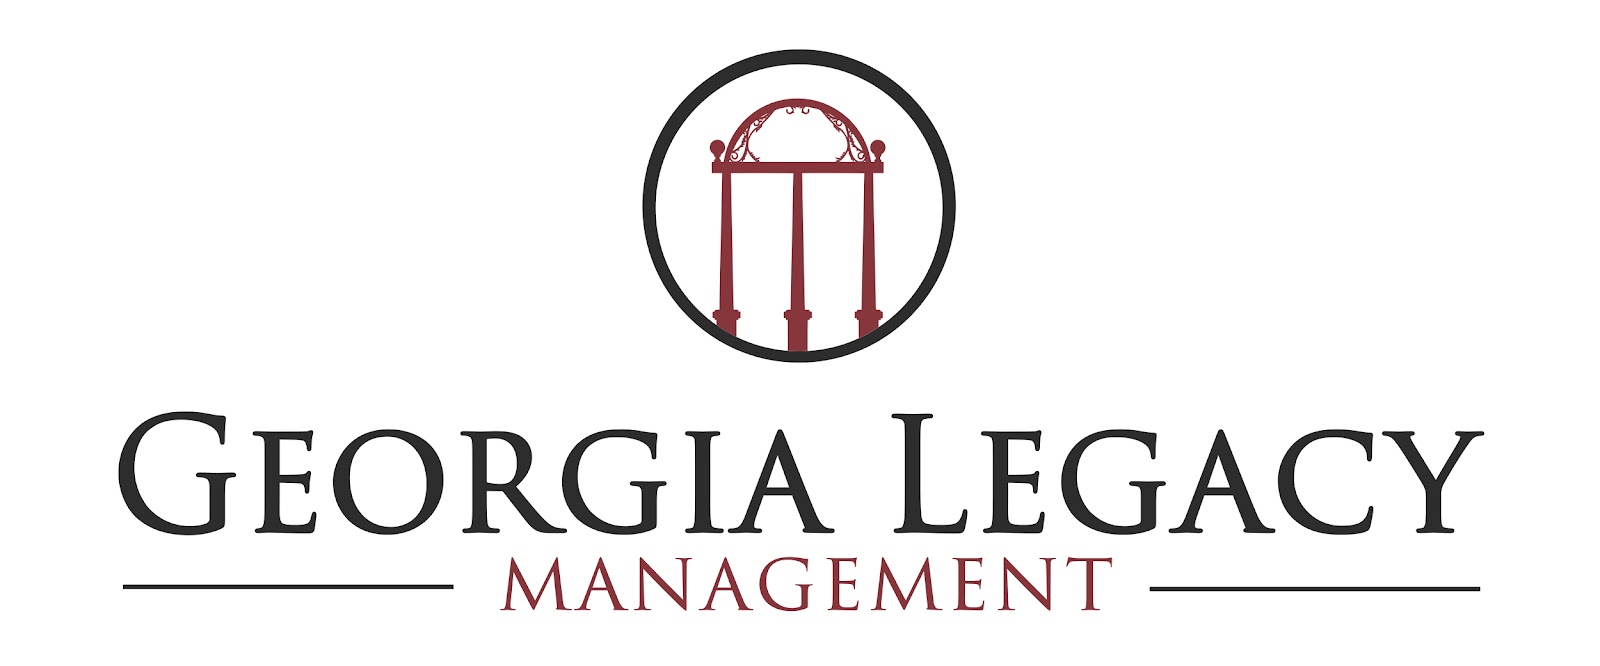 georgia legacy management_3.jpg